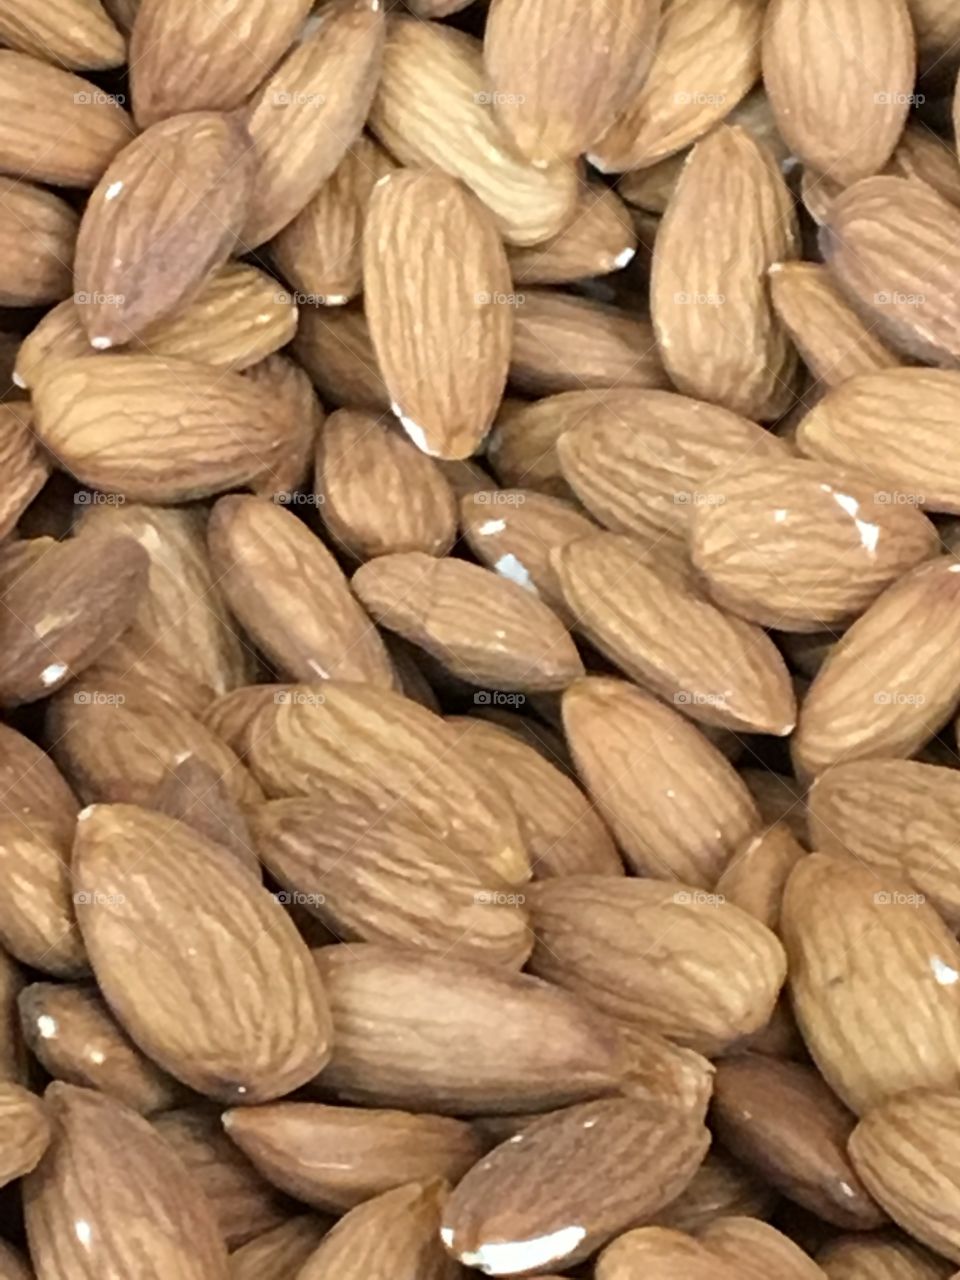 Almonds 